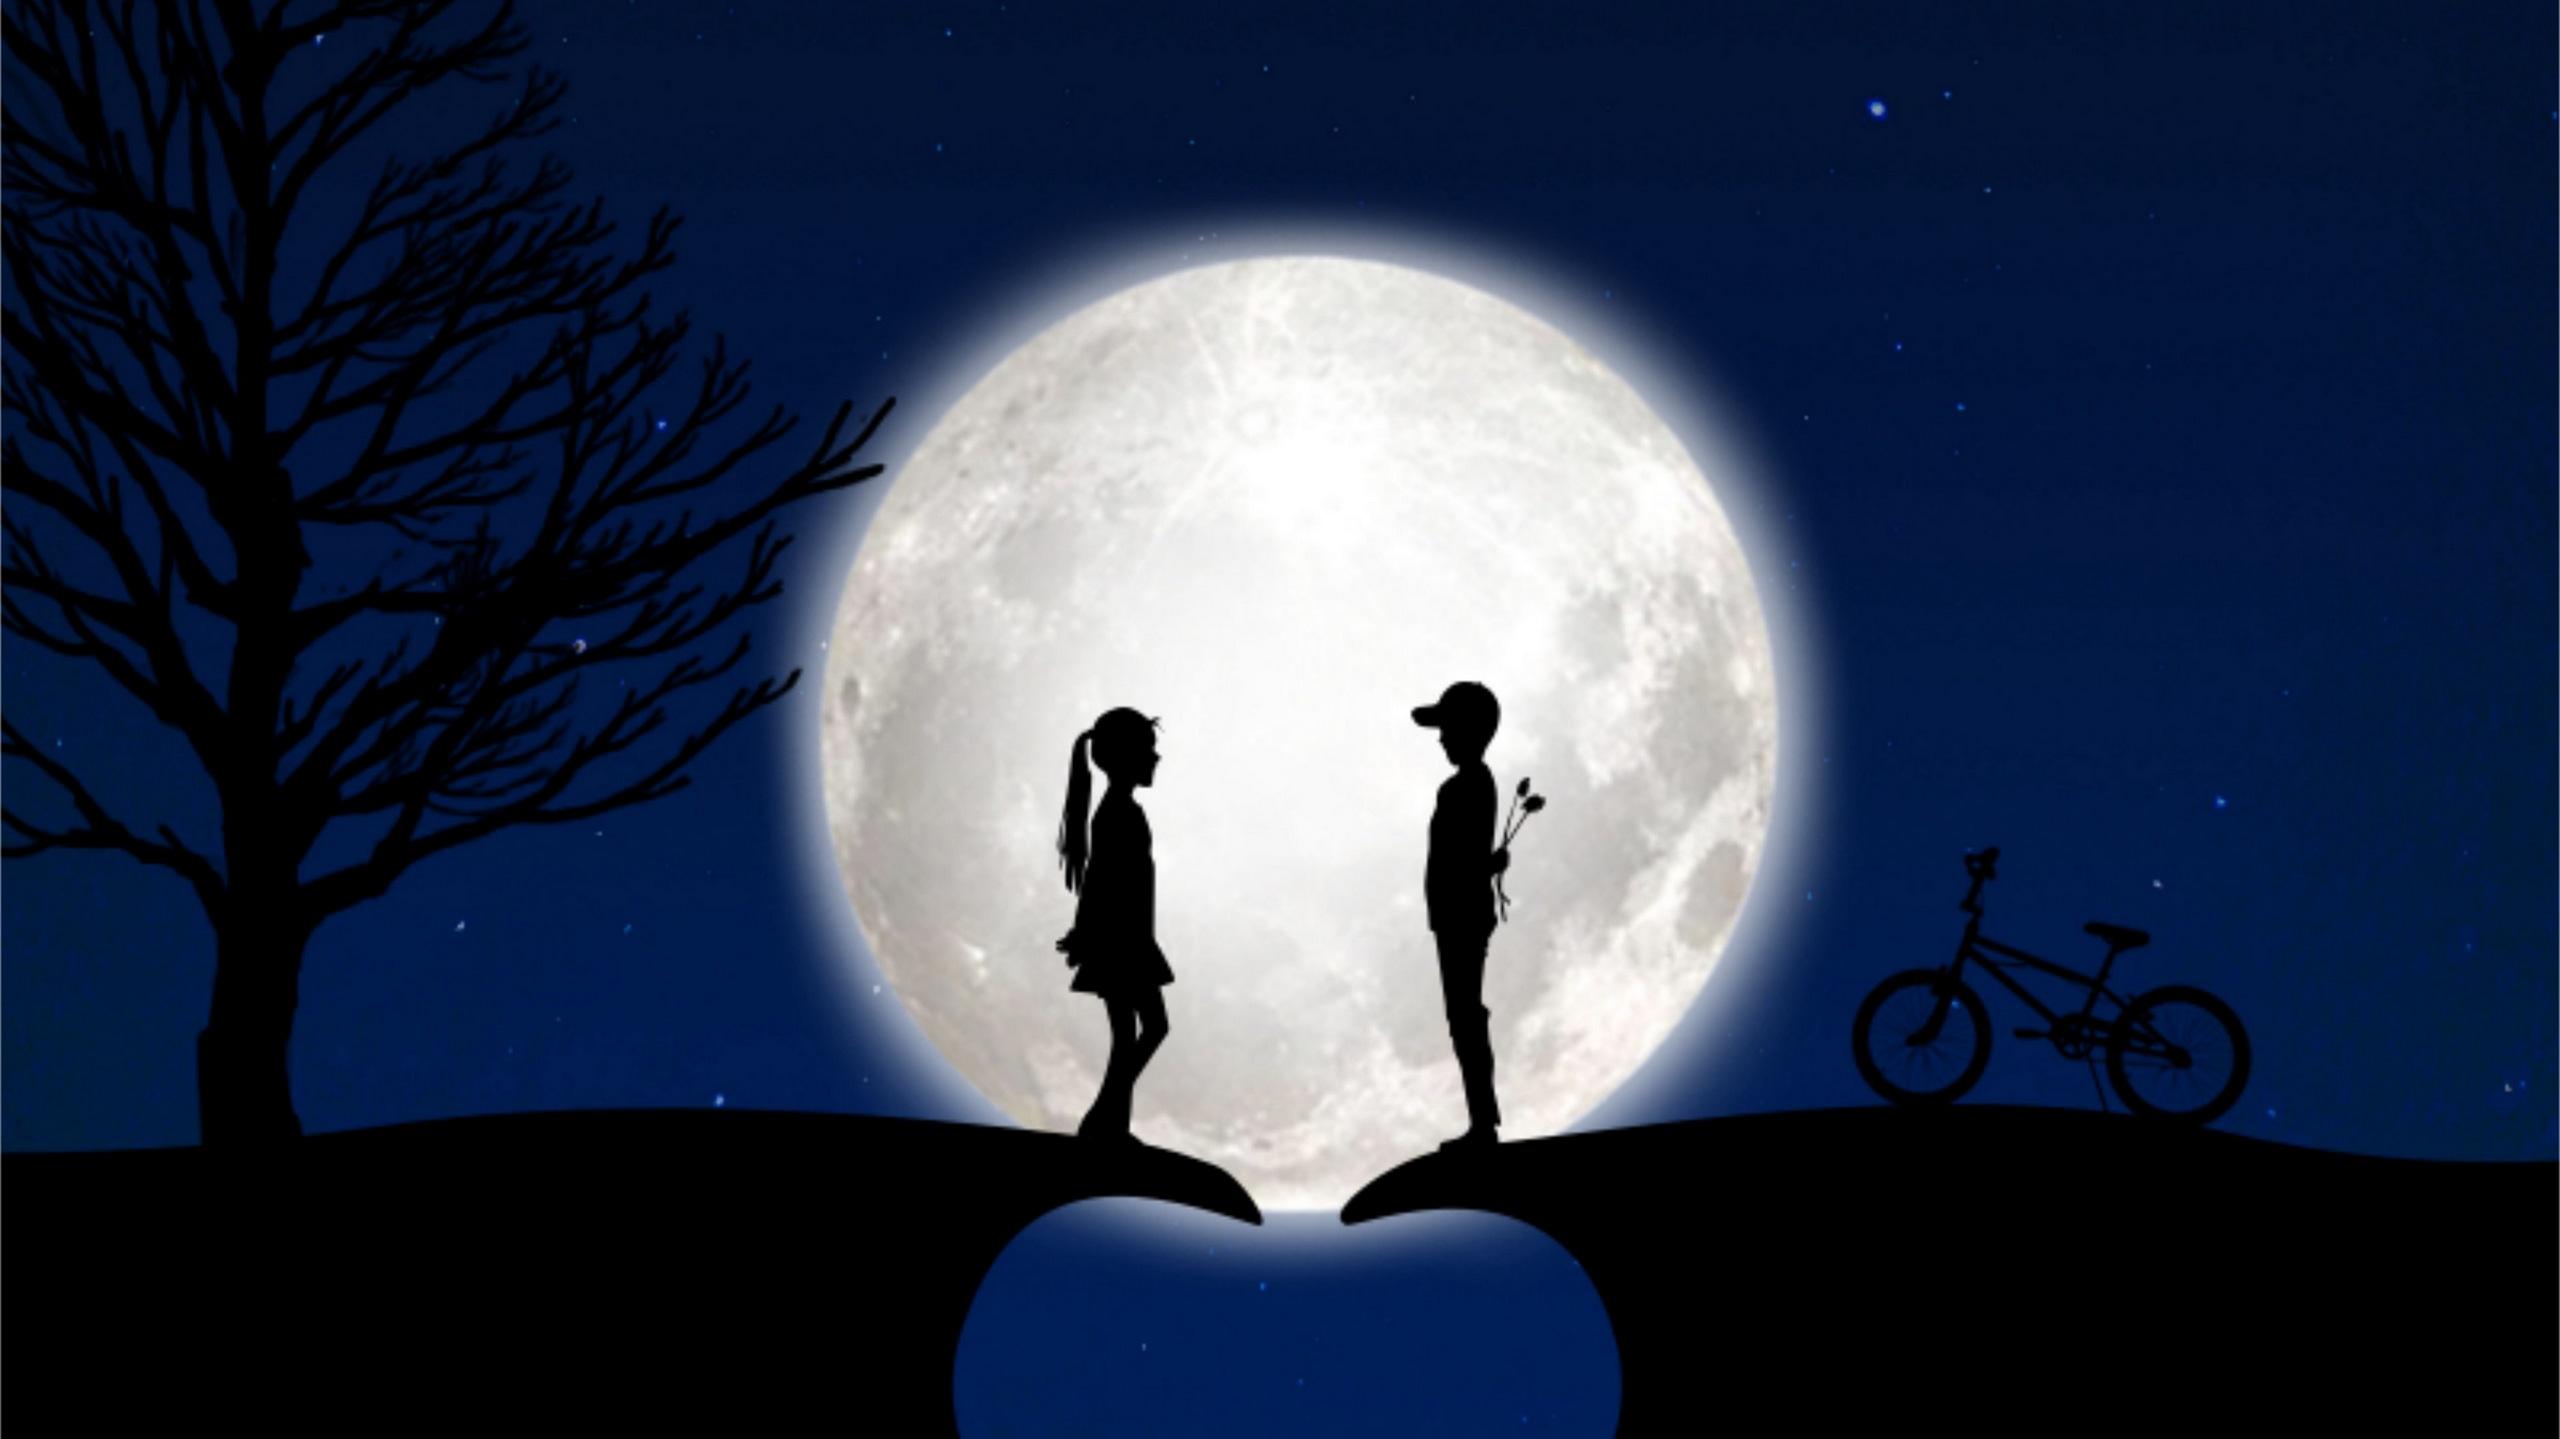 Wallpaper Id Children Silhouettes Love Moon Romance